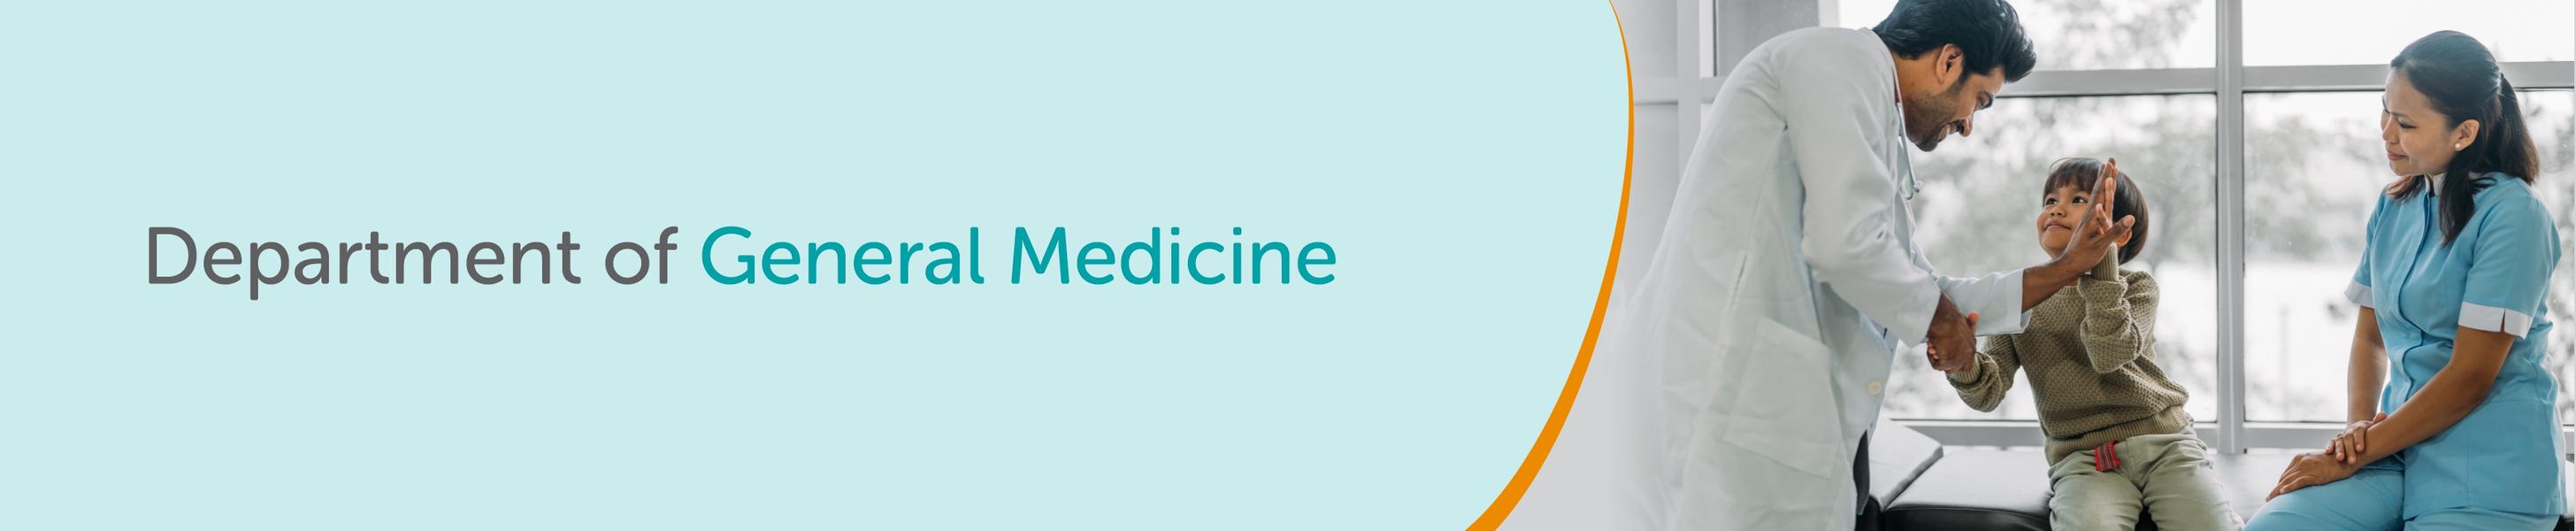 LBN Department of General Medicine web Banner